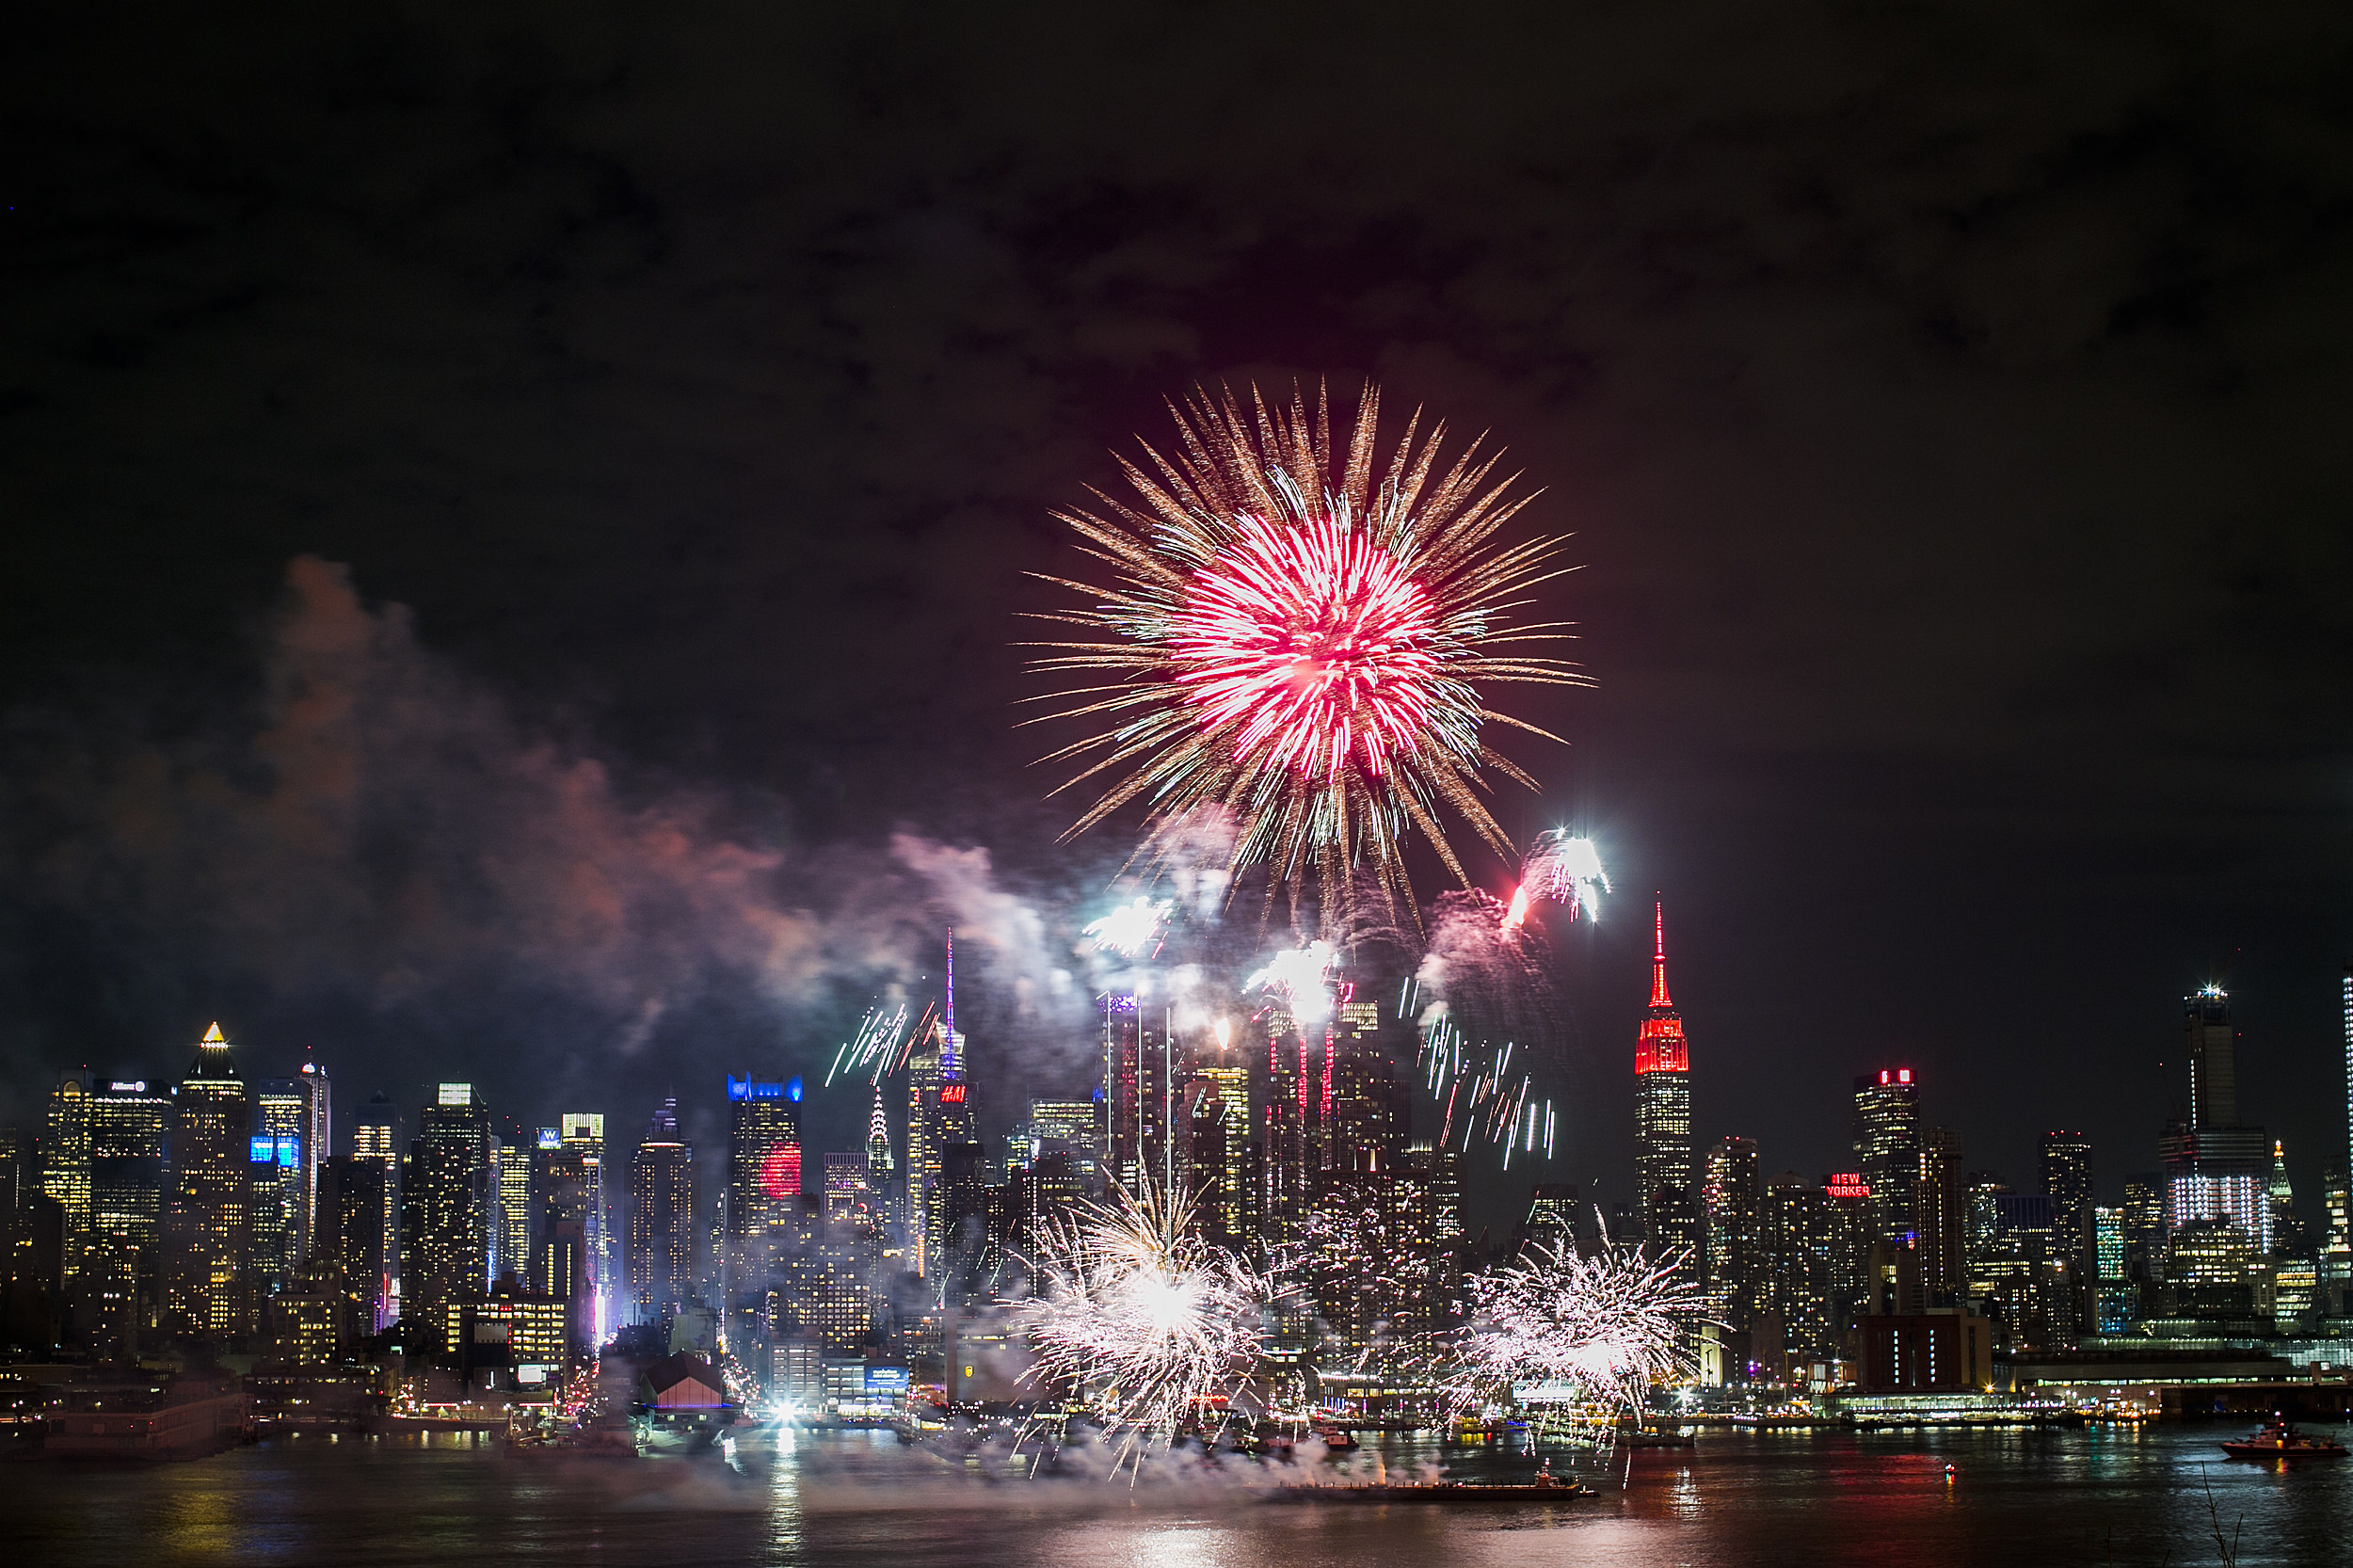 Fireworks New Jersey 101.5